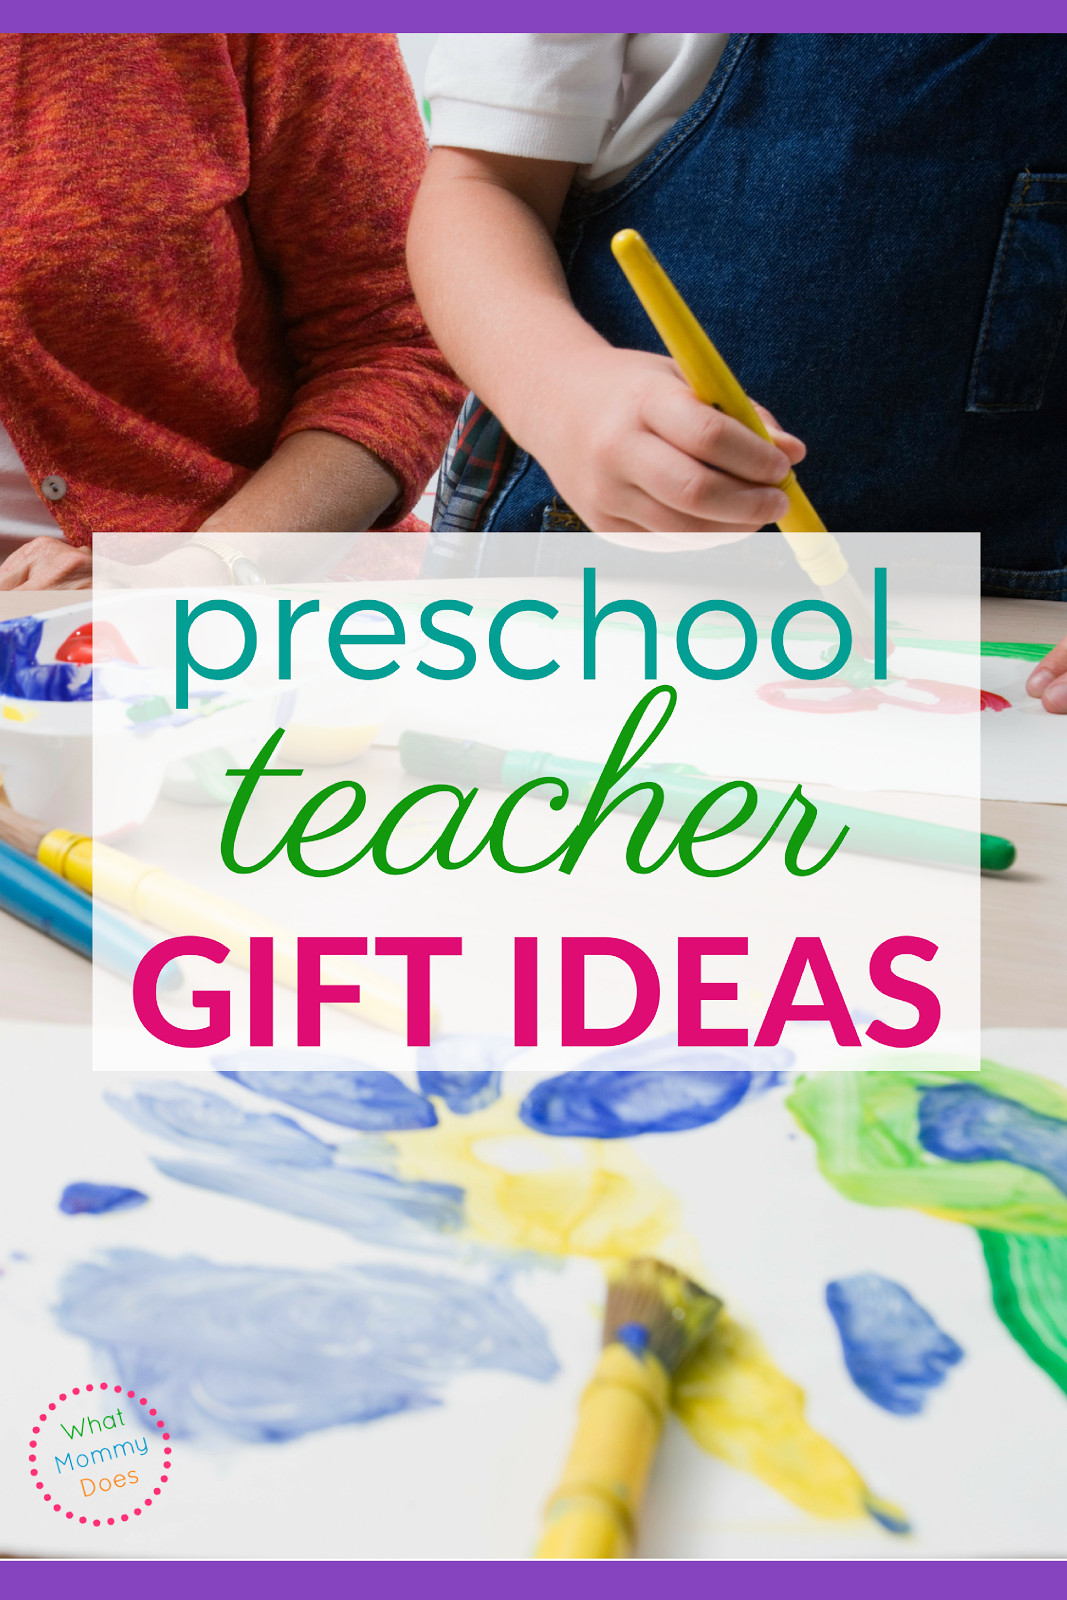 Preschool Teacher Holiday Gift Ideas
 Preschool Teacher Gift Ideas What Mommy Does